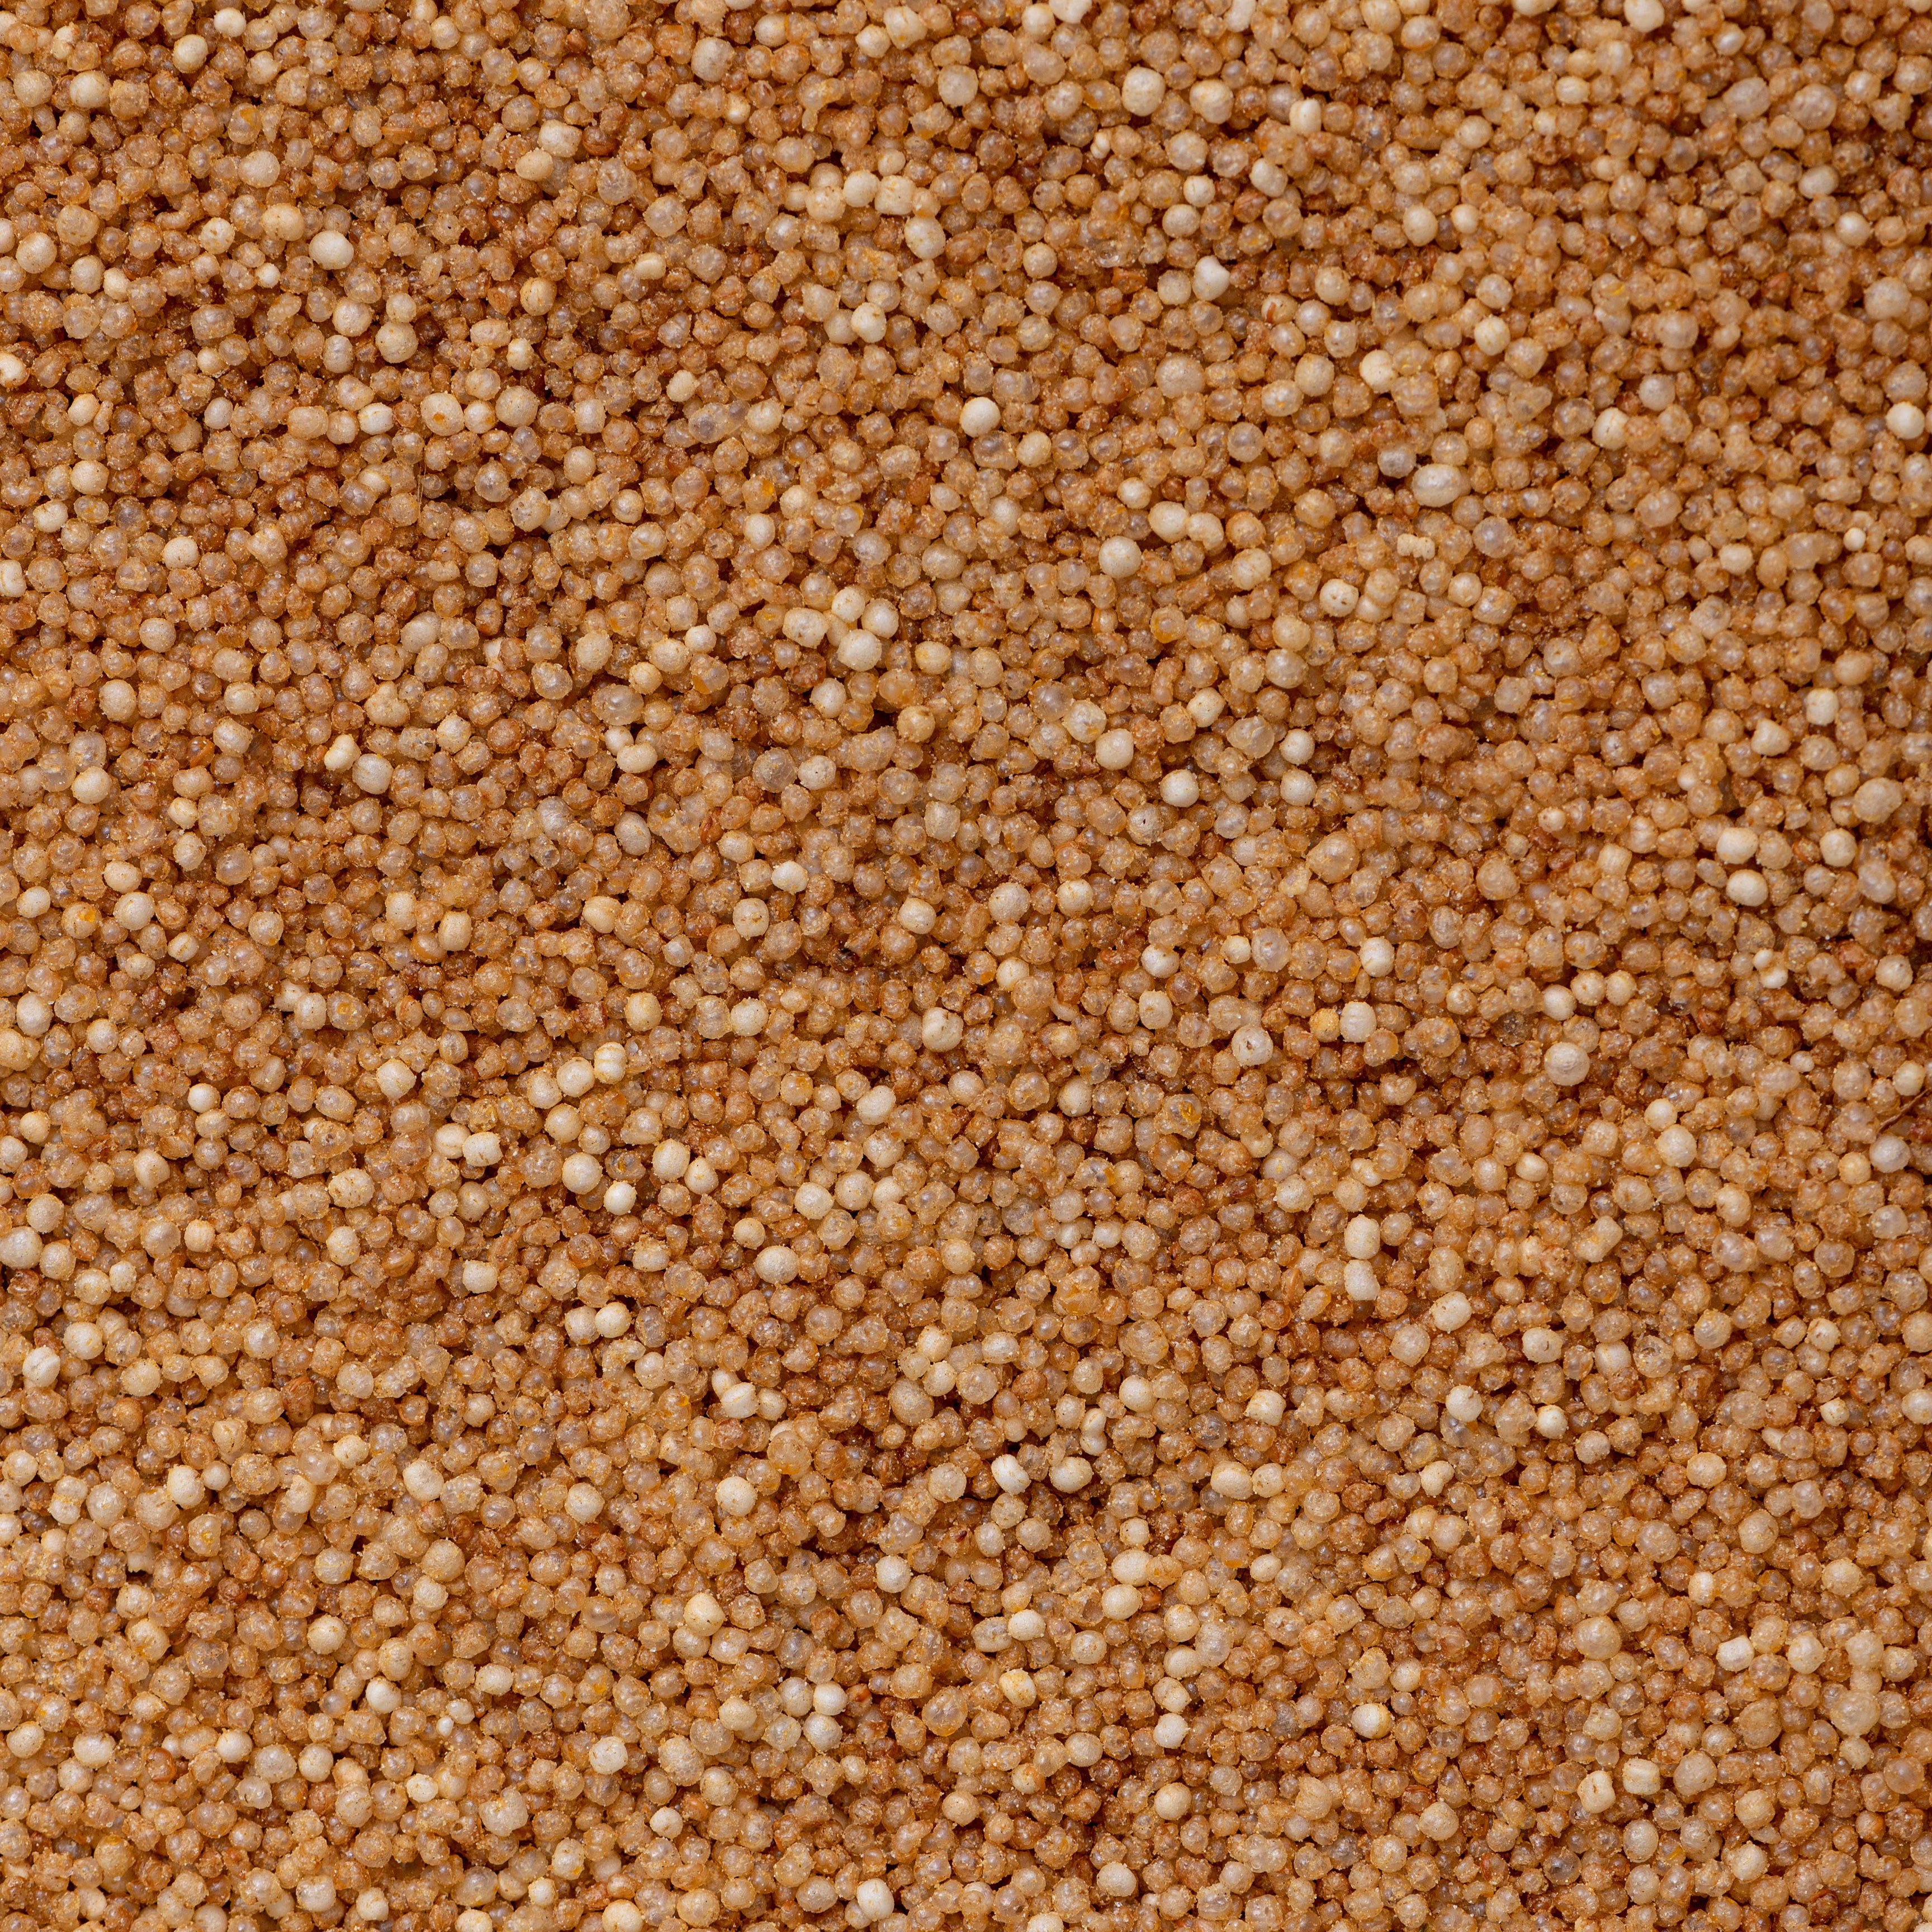 Roasted Quinoa (Jalapeno)